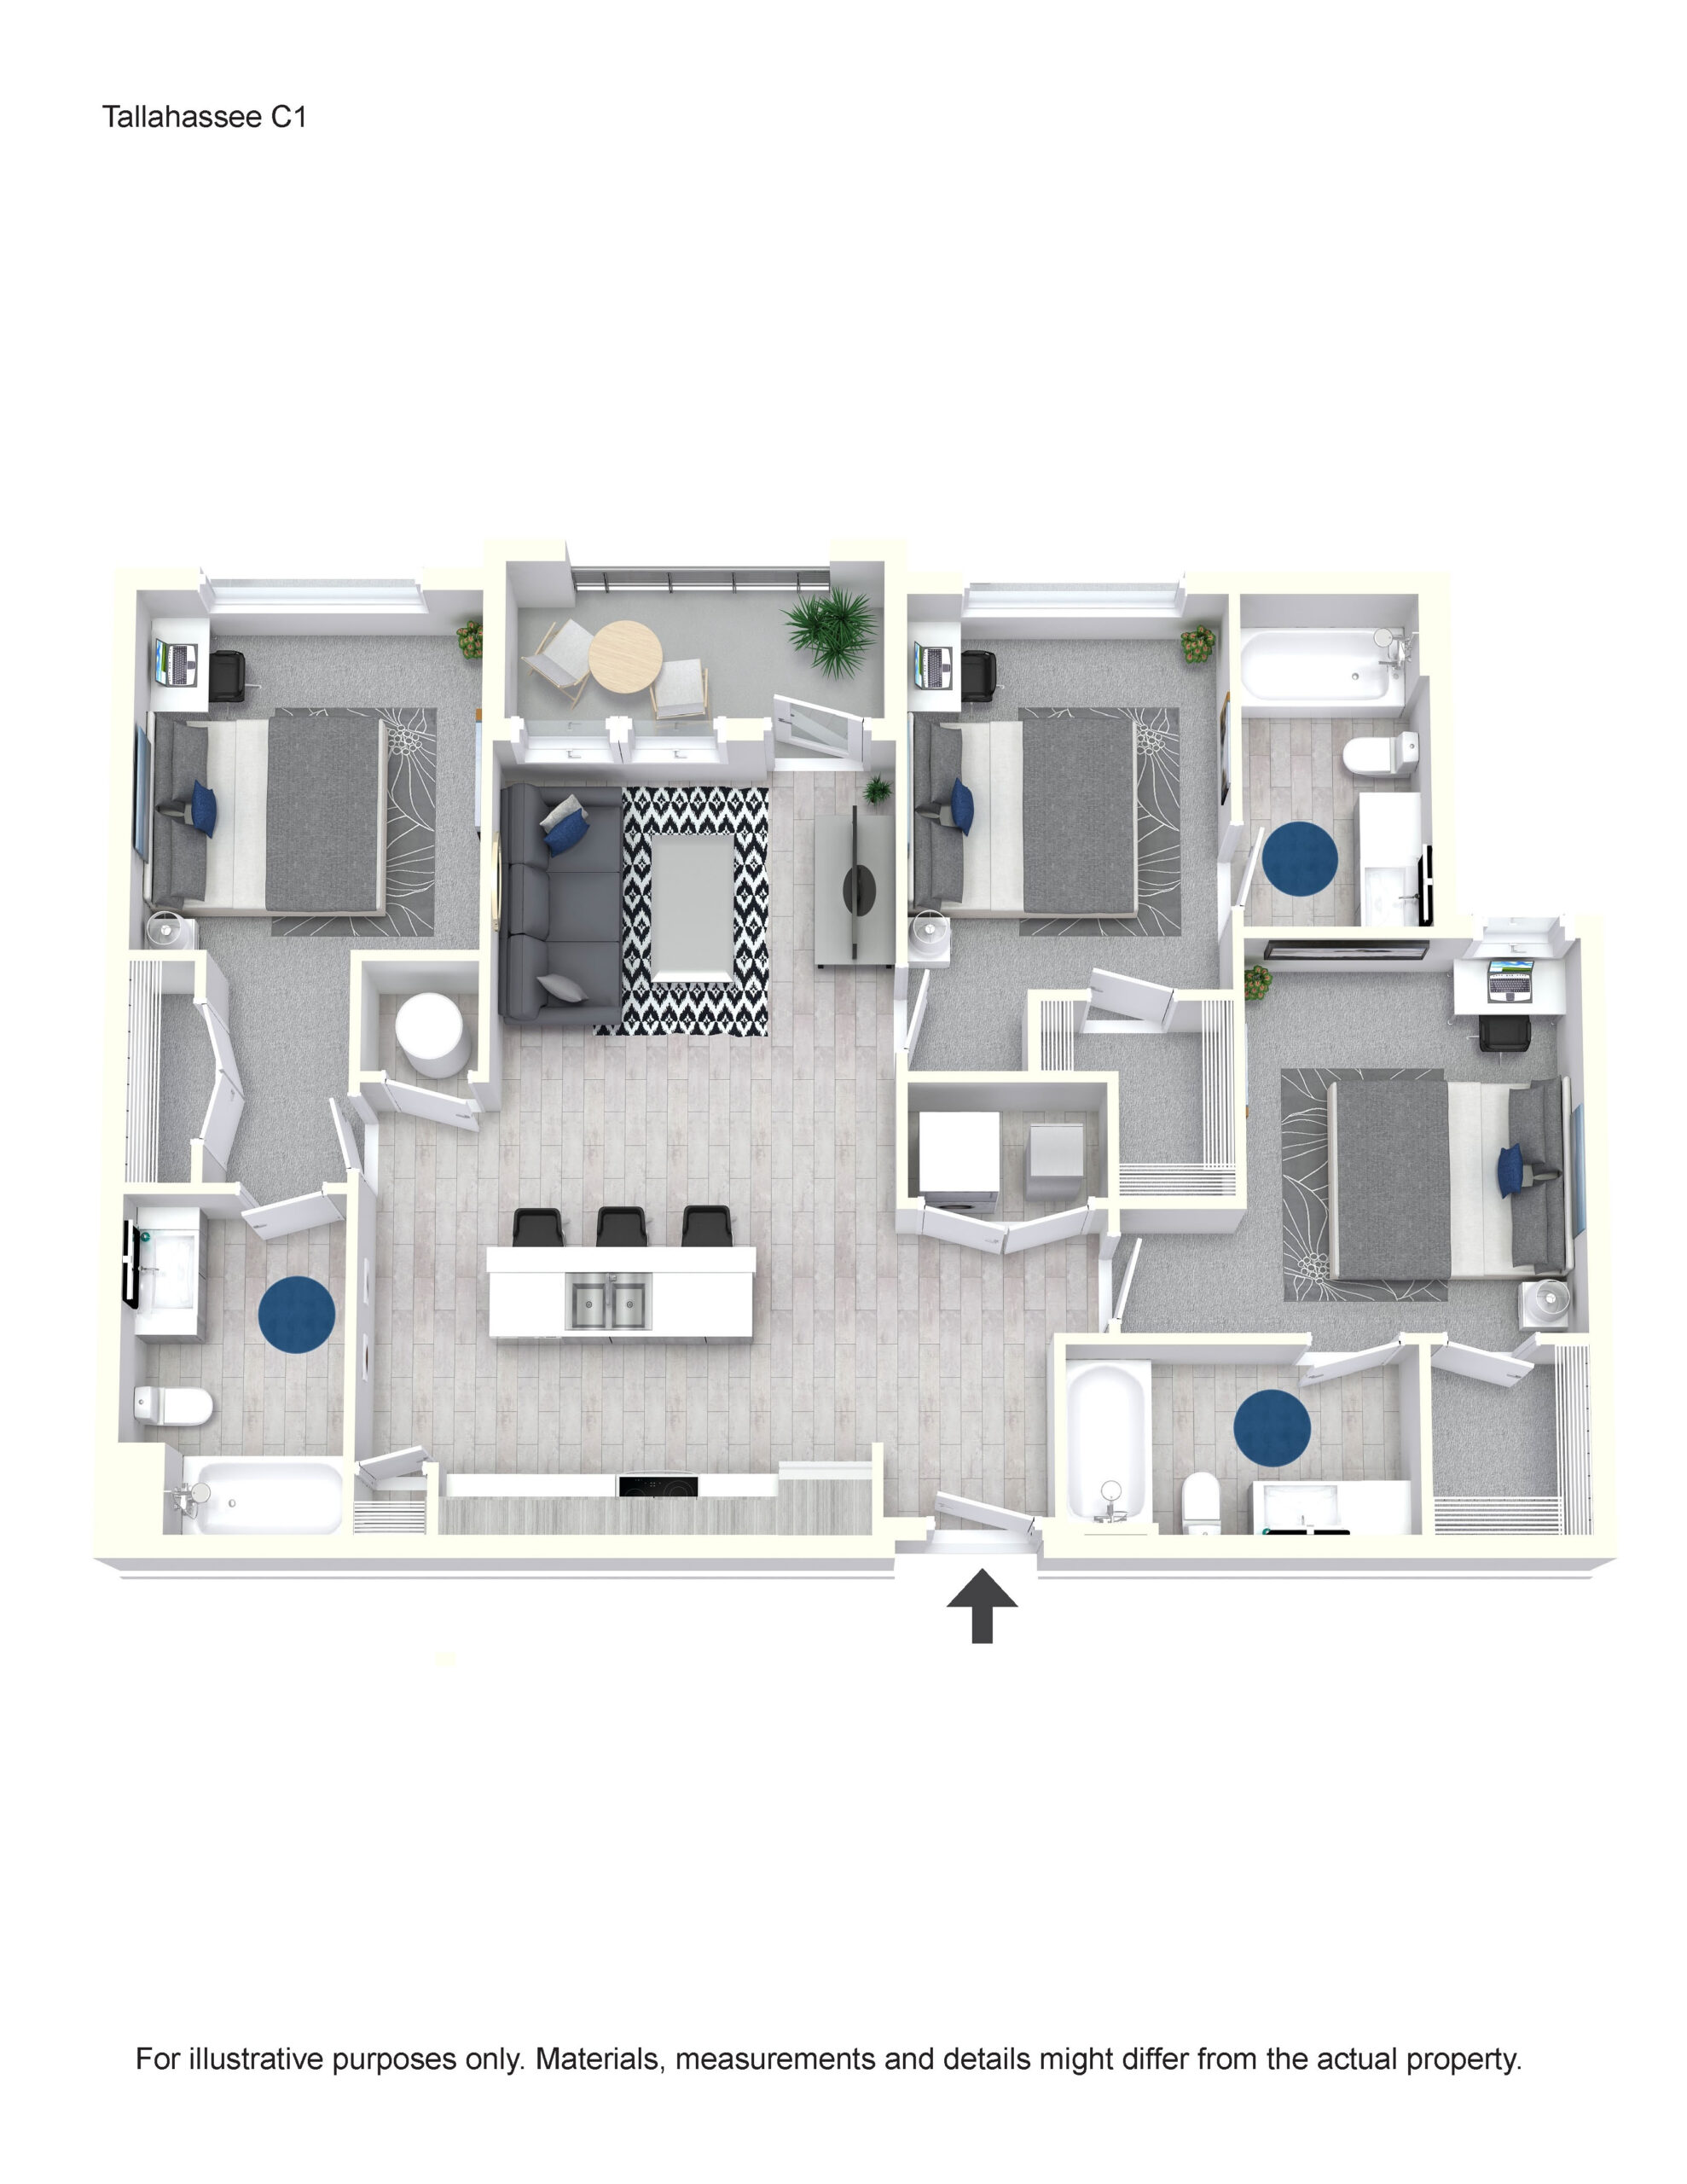 3 Bedroom Apartment Tallahassee C1